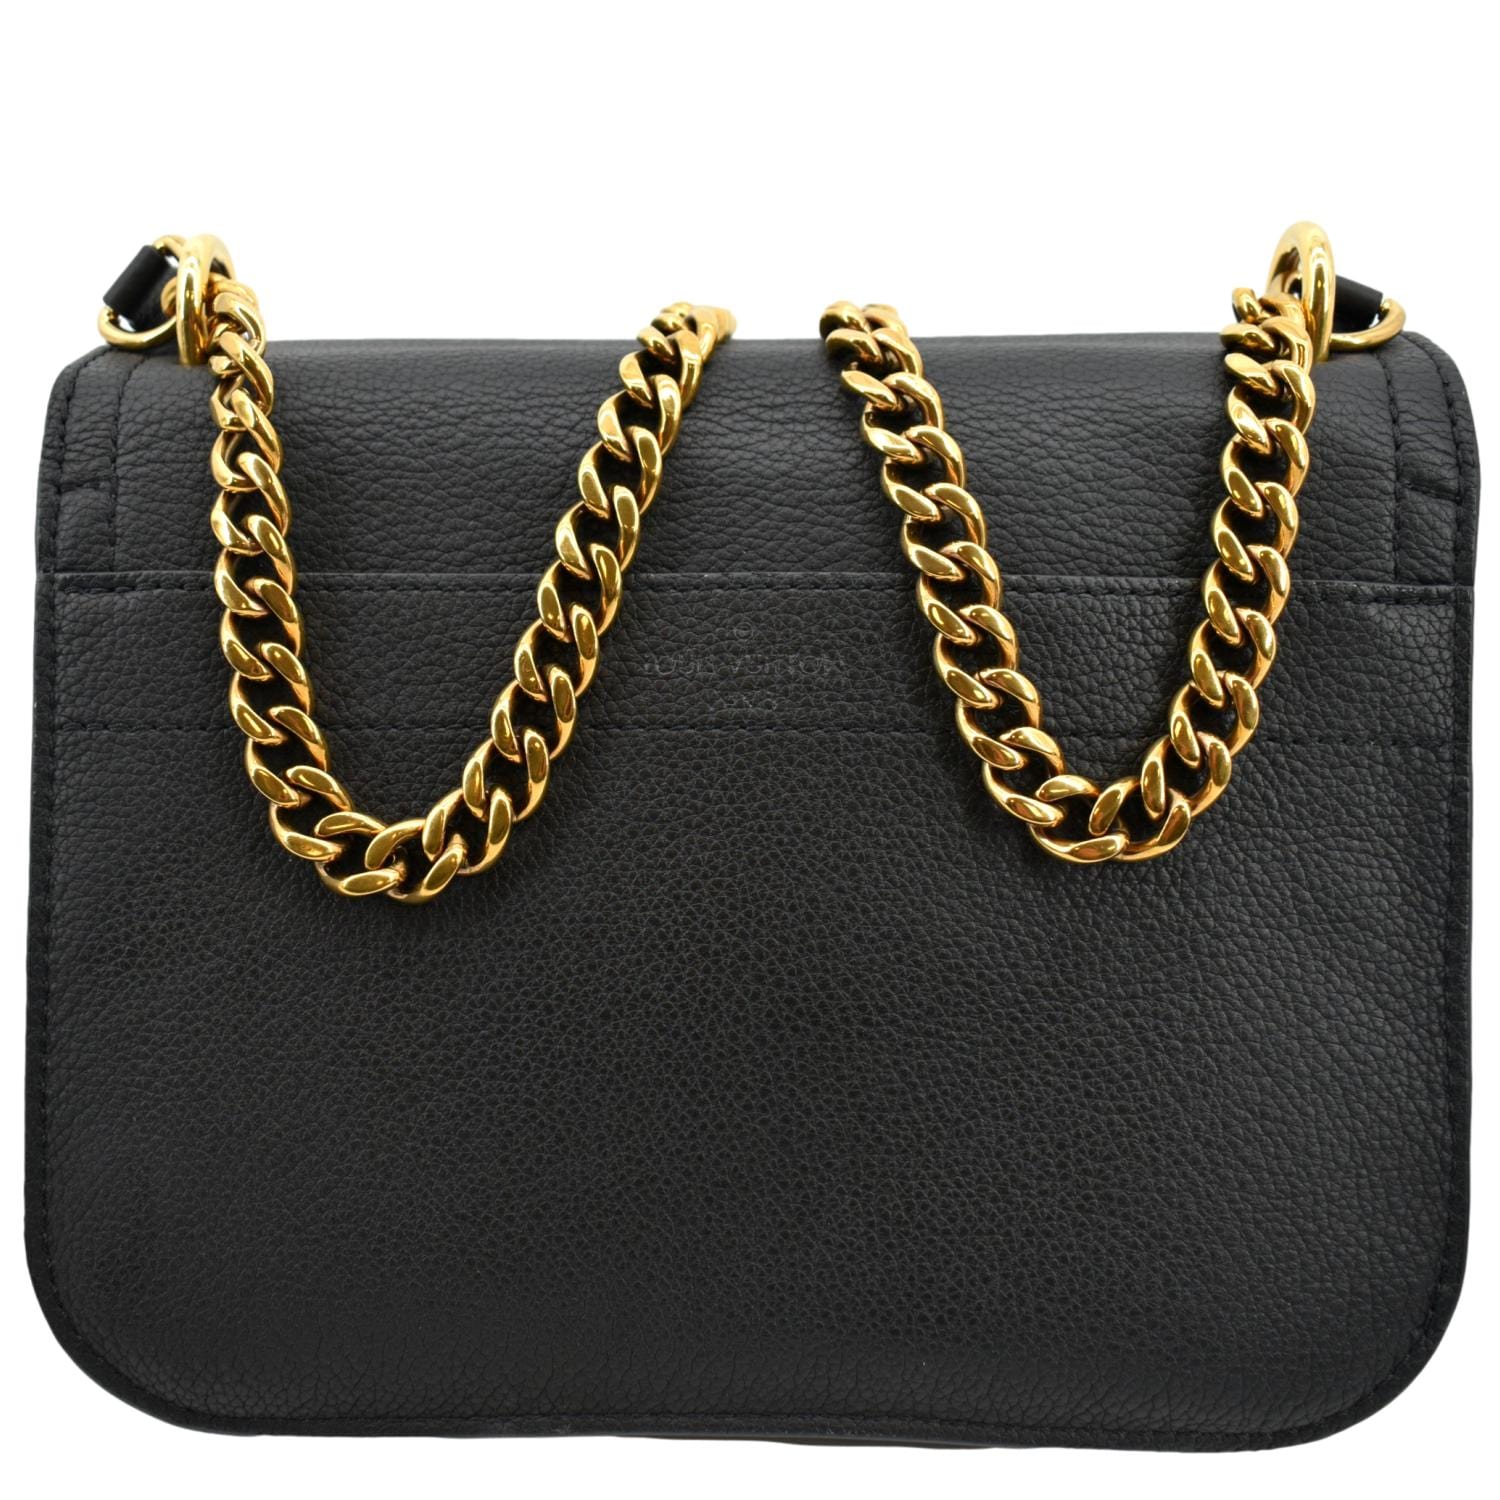 Louis Vuitton Lockme Chain Bag, Black, One Size